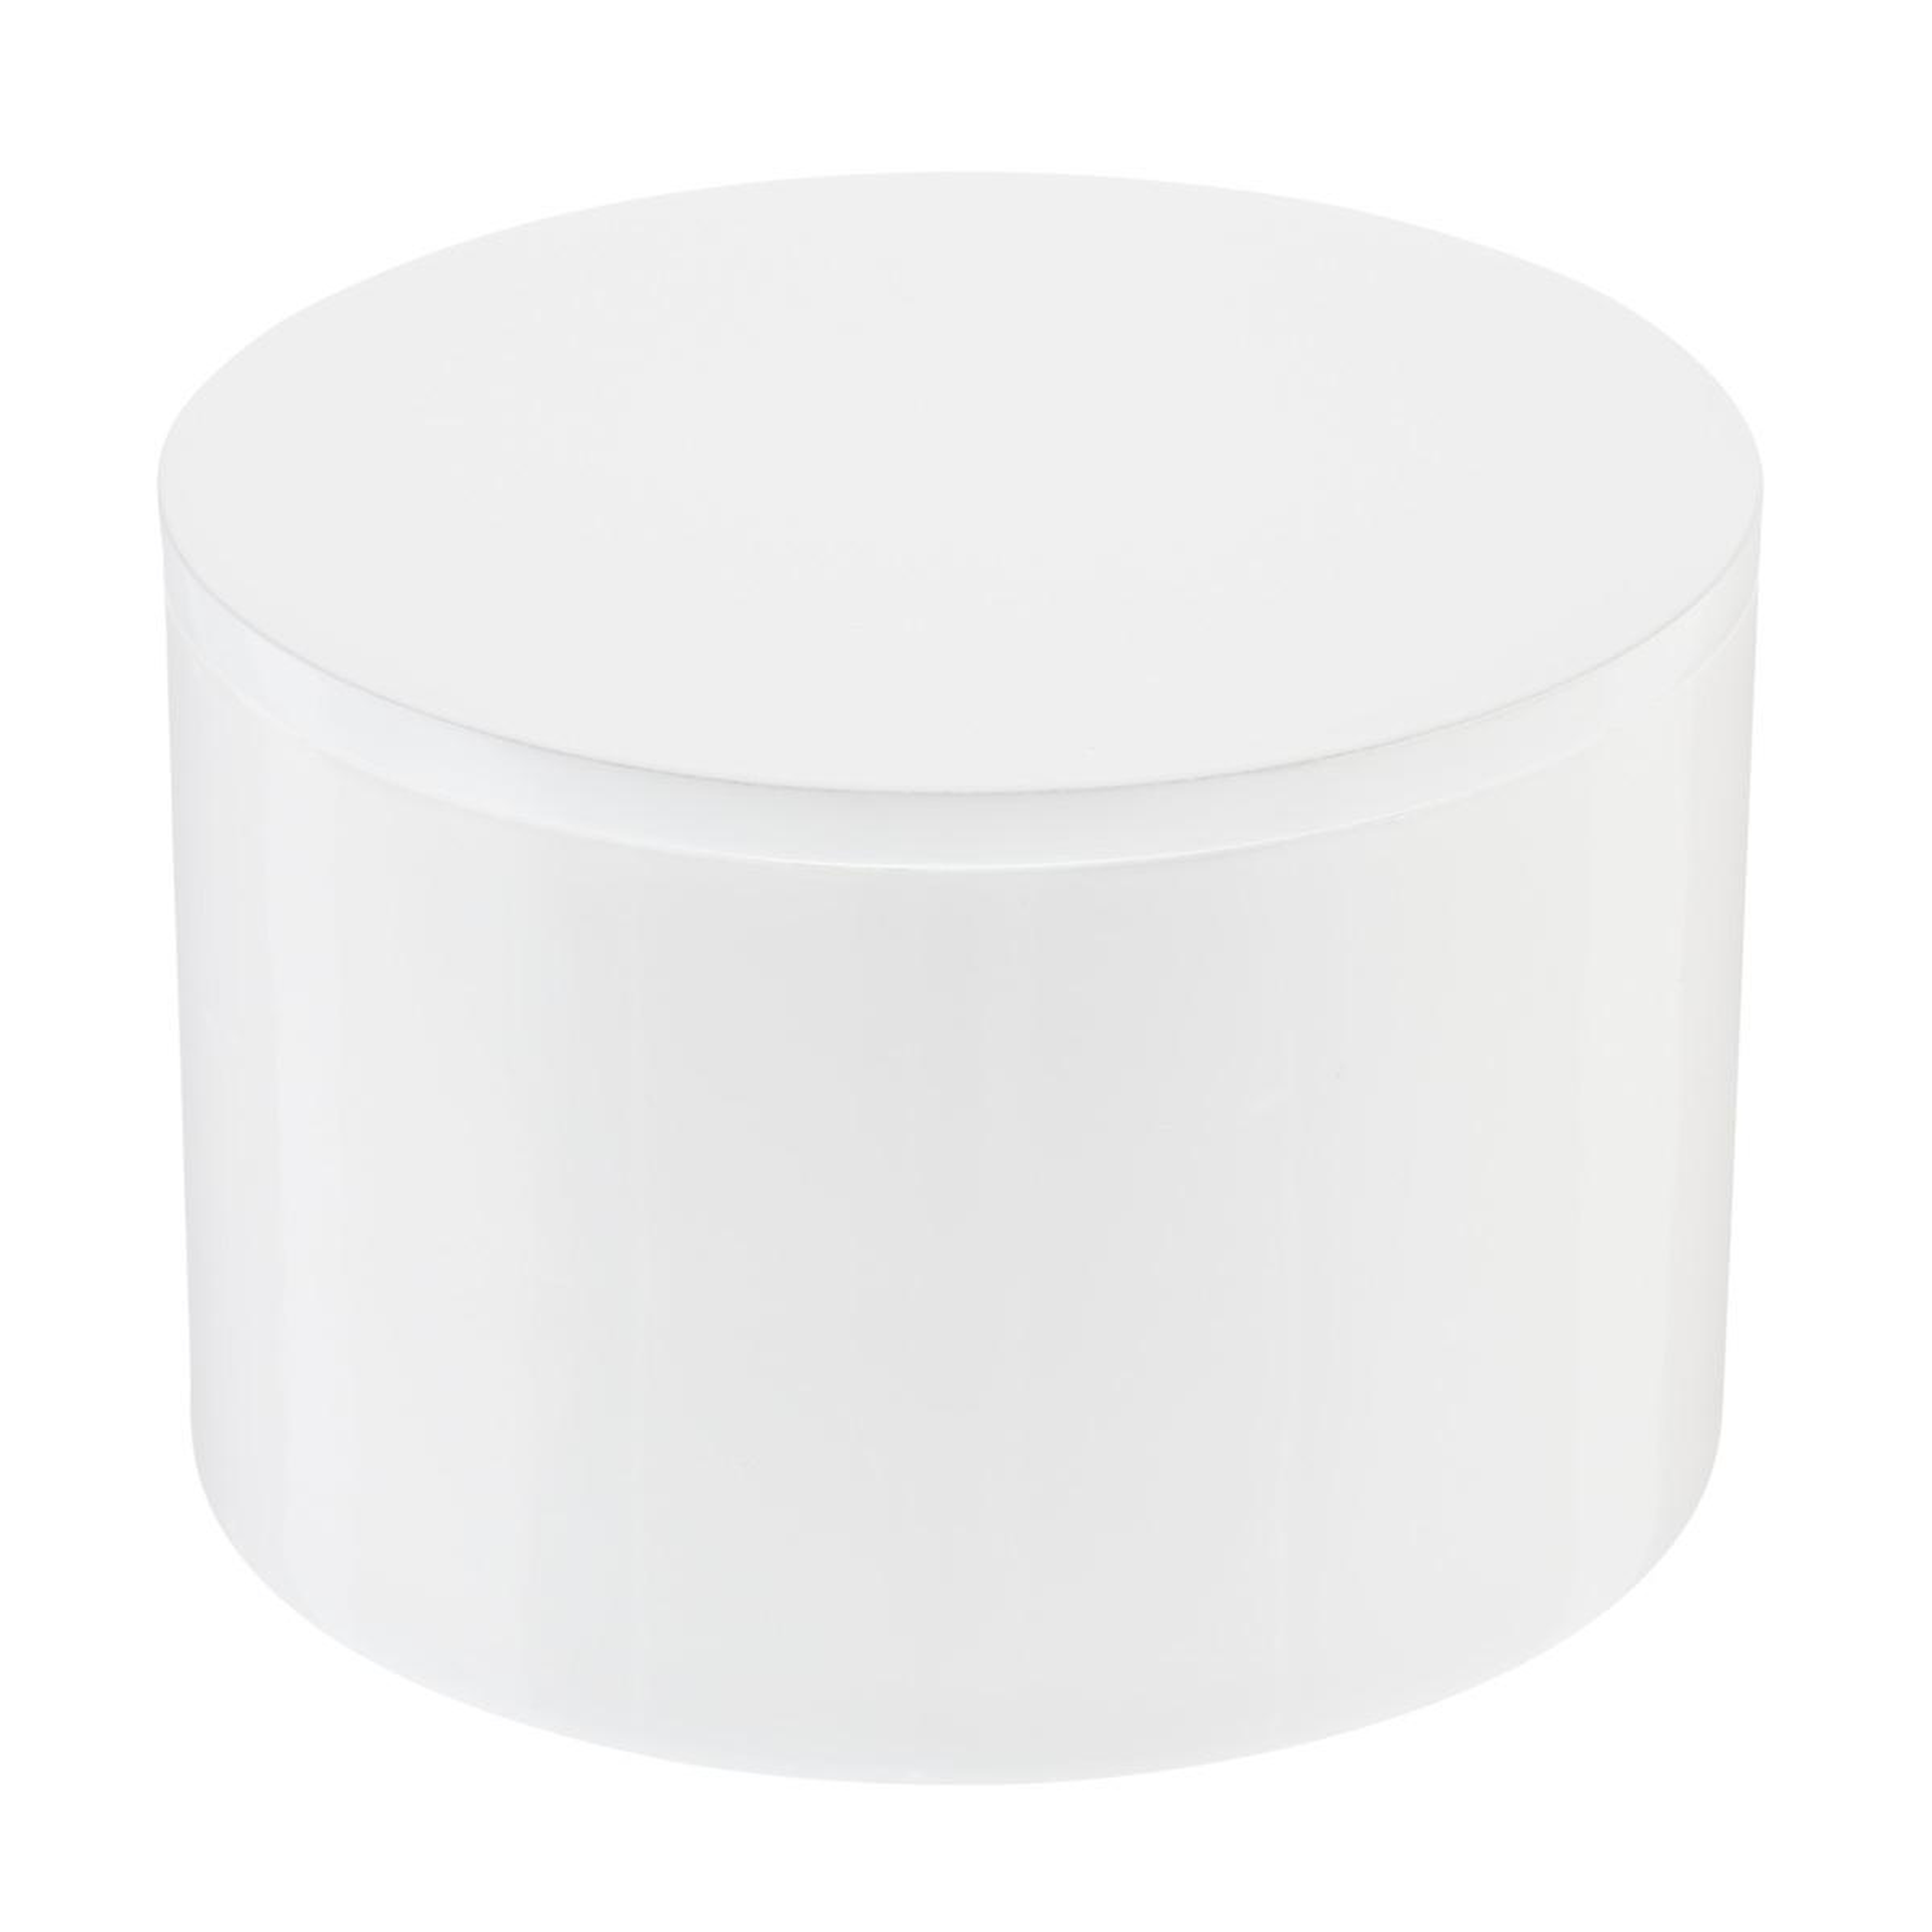 White Round Lacquered Box - containerstore.com